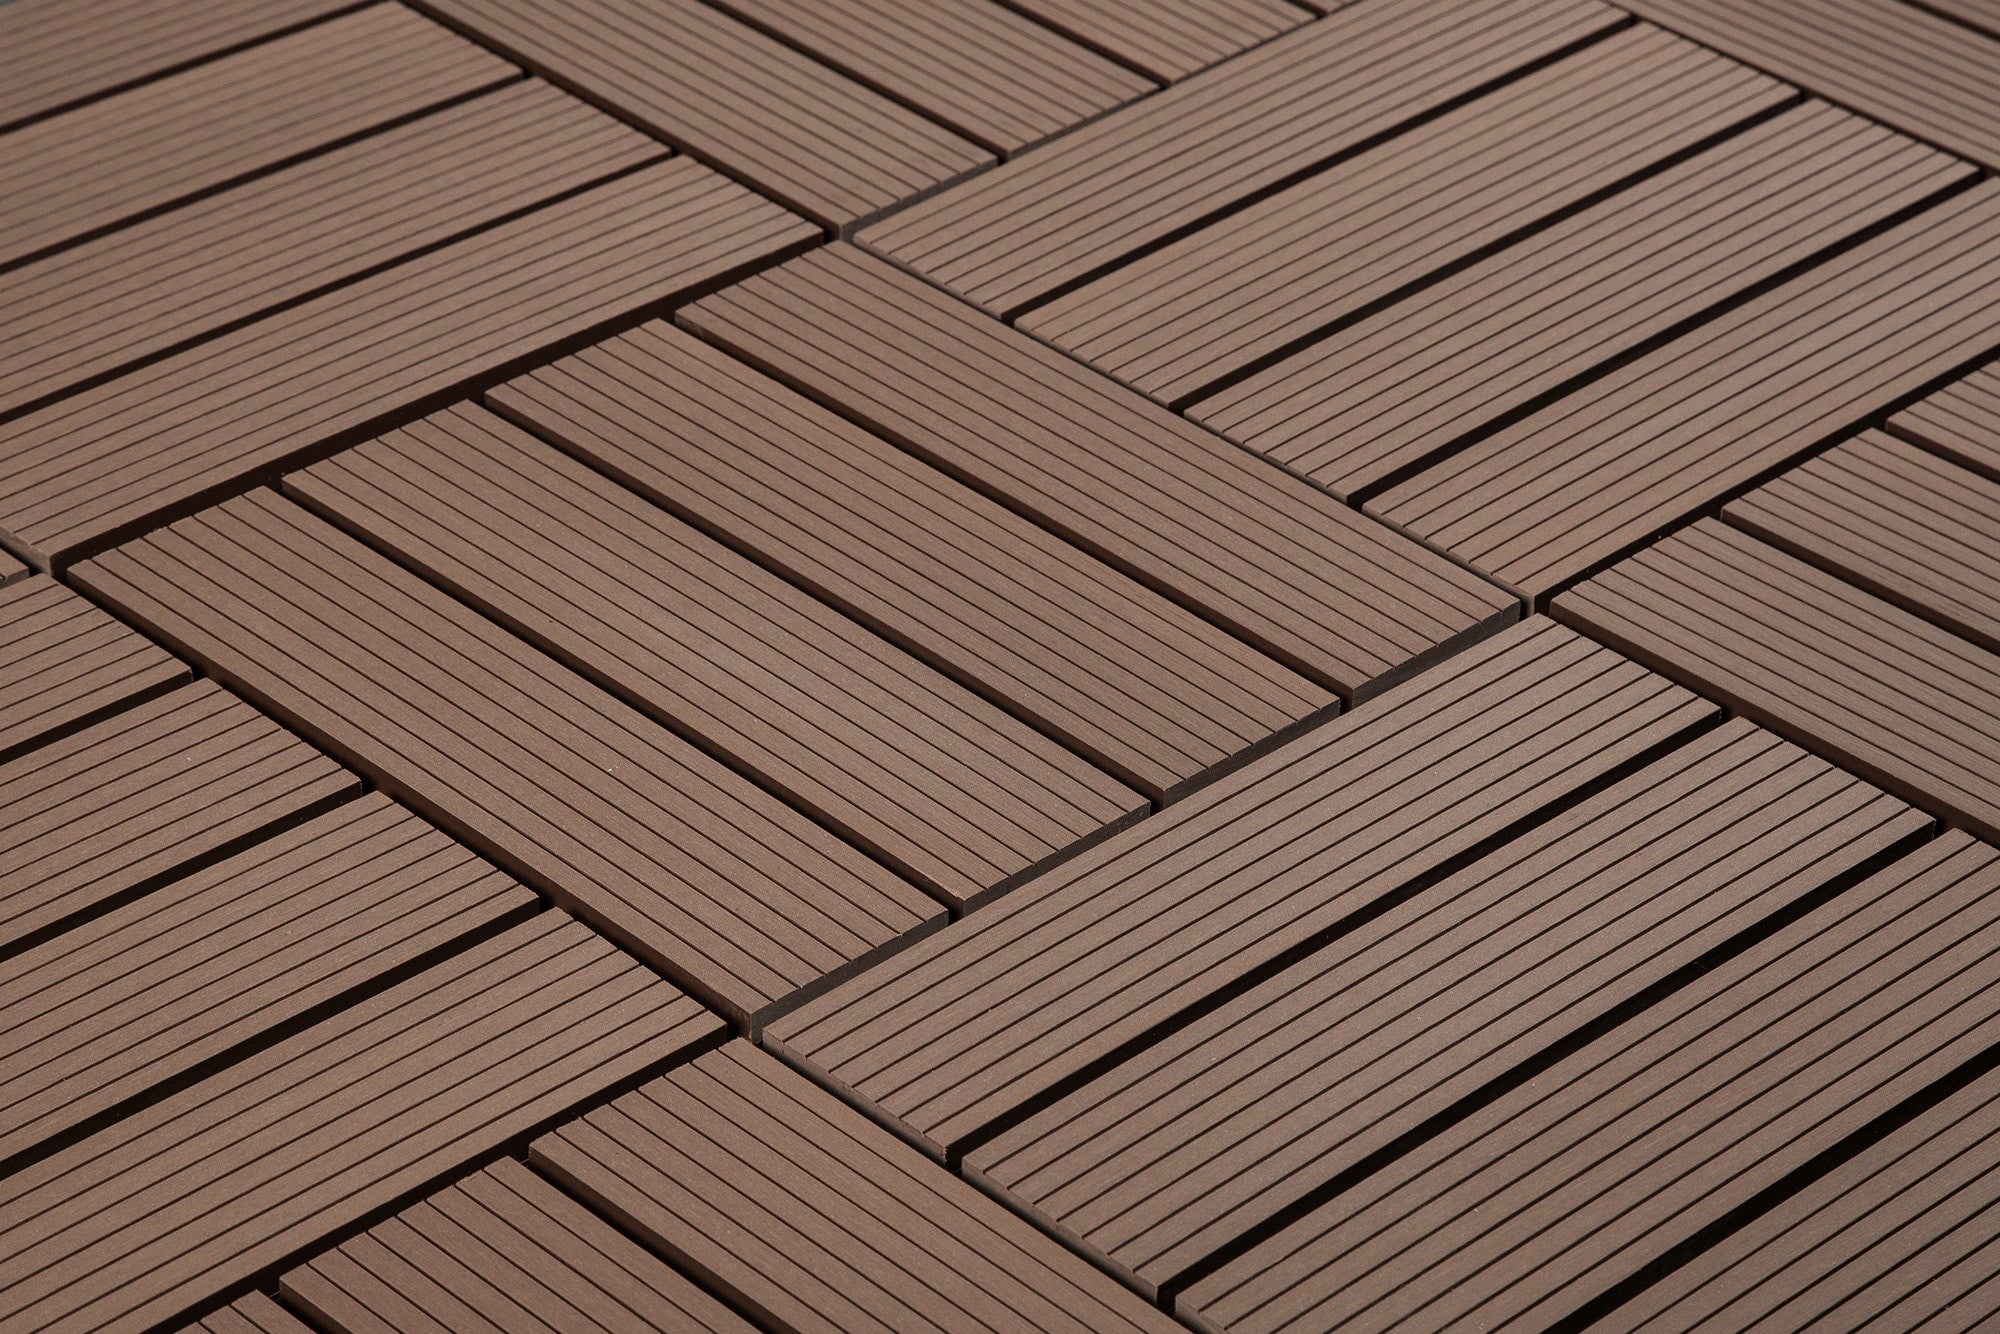 Jf Outdoor Composite Interlocking Deck Tiles Builddirect